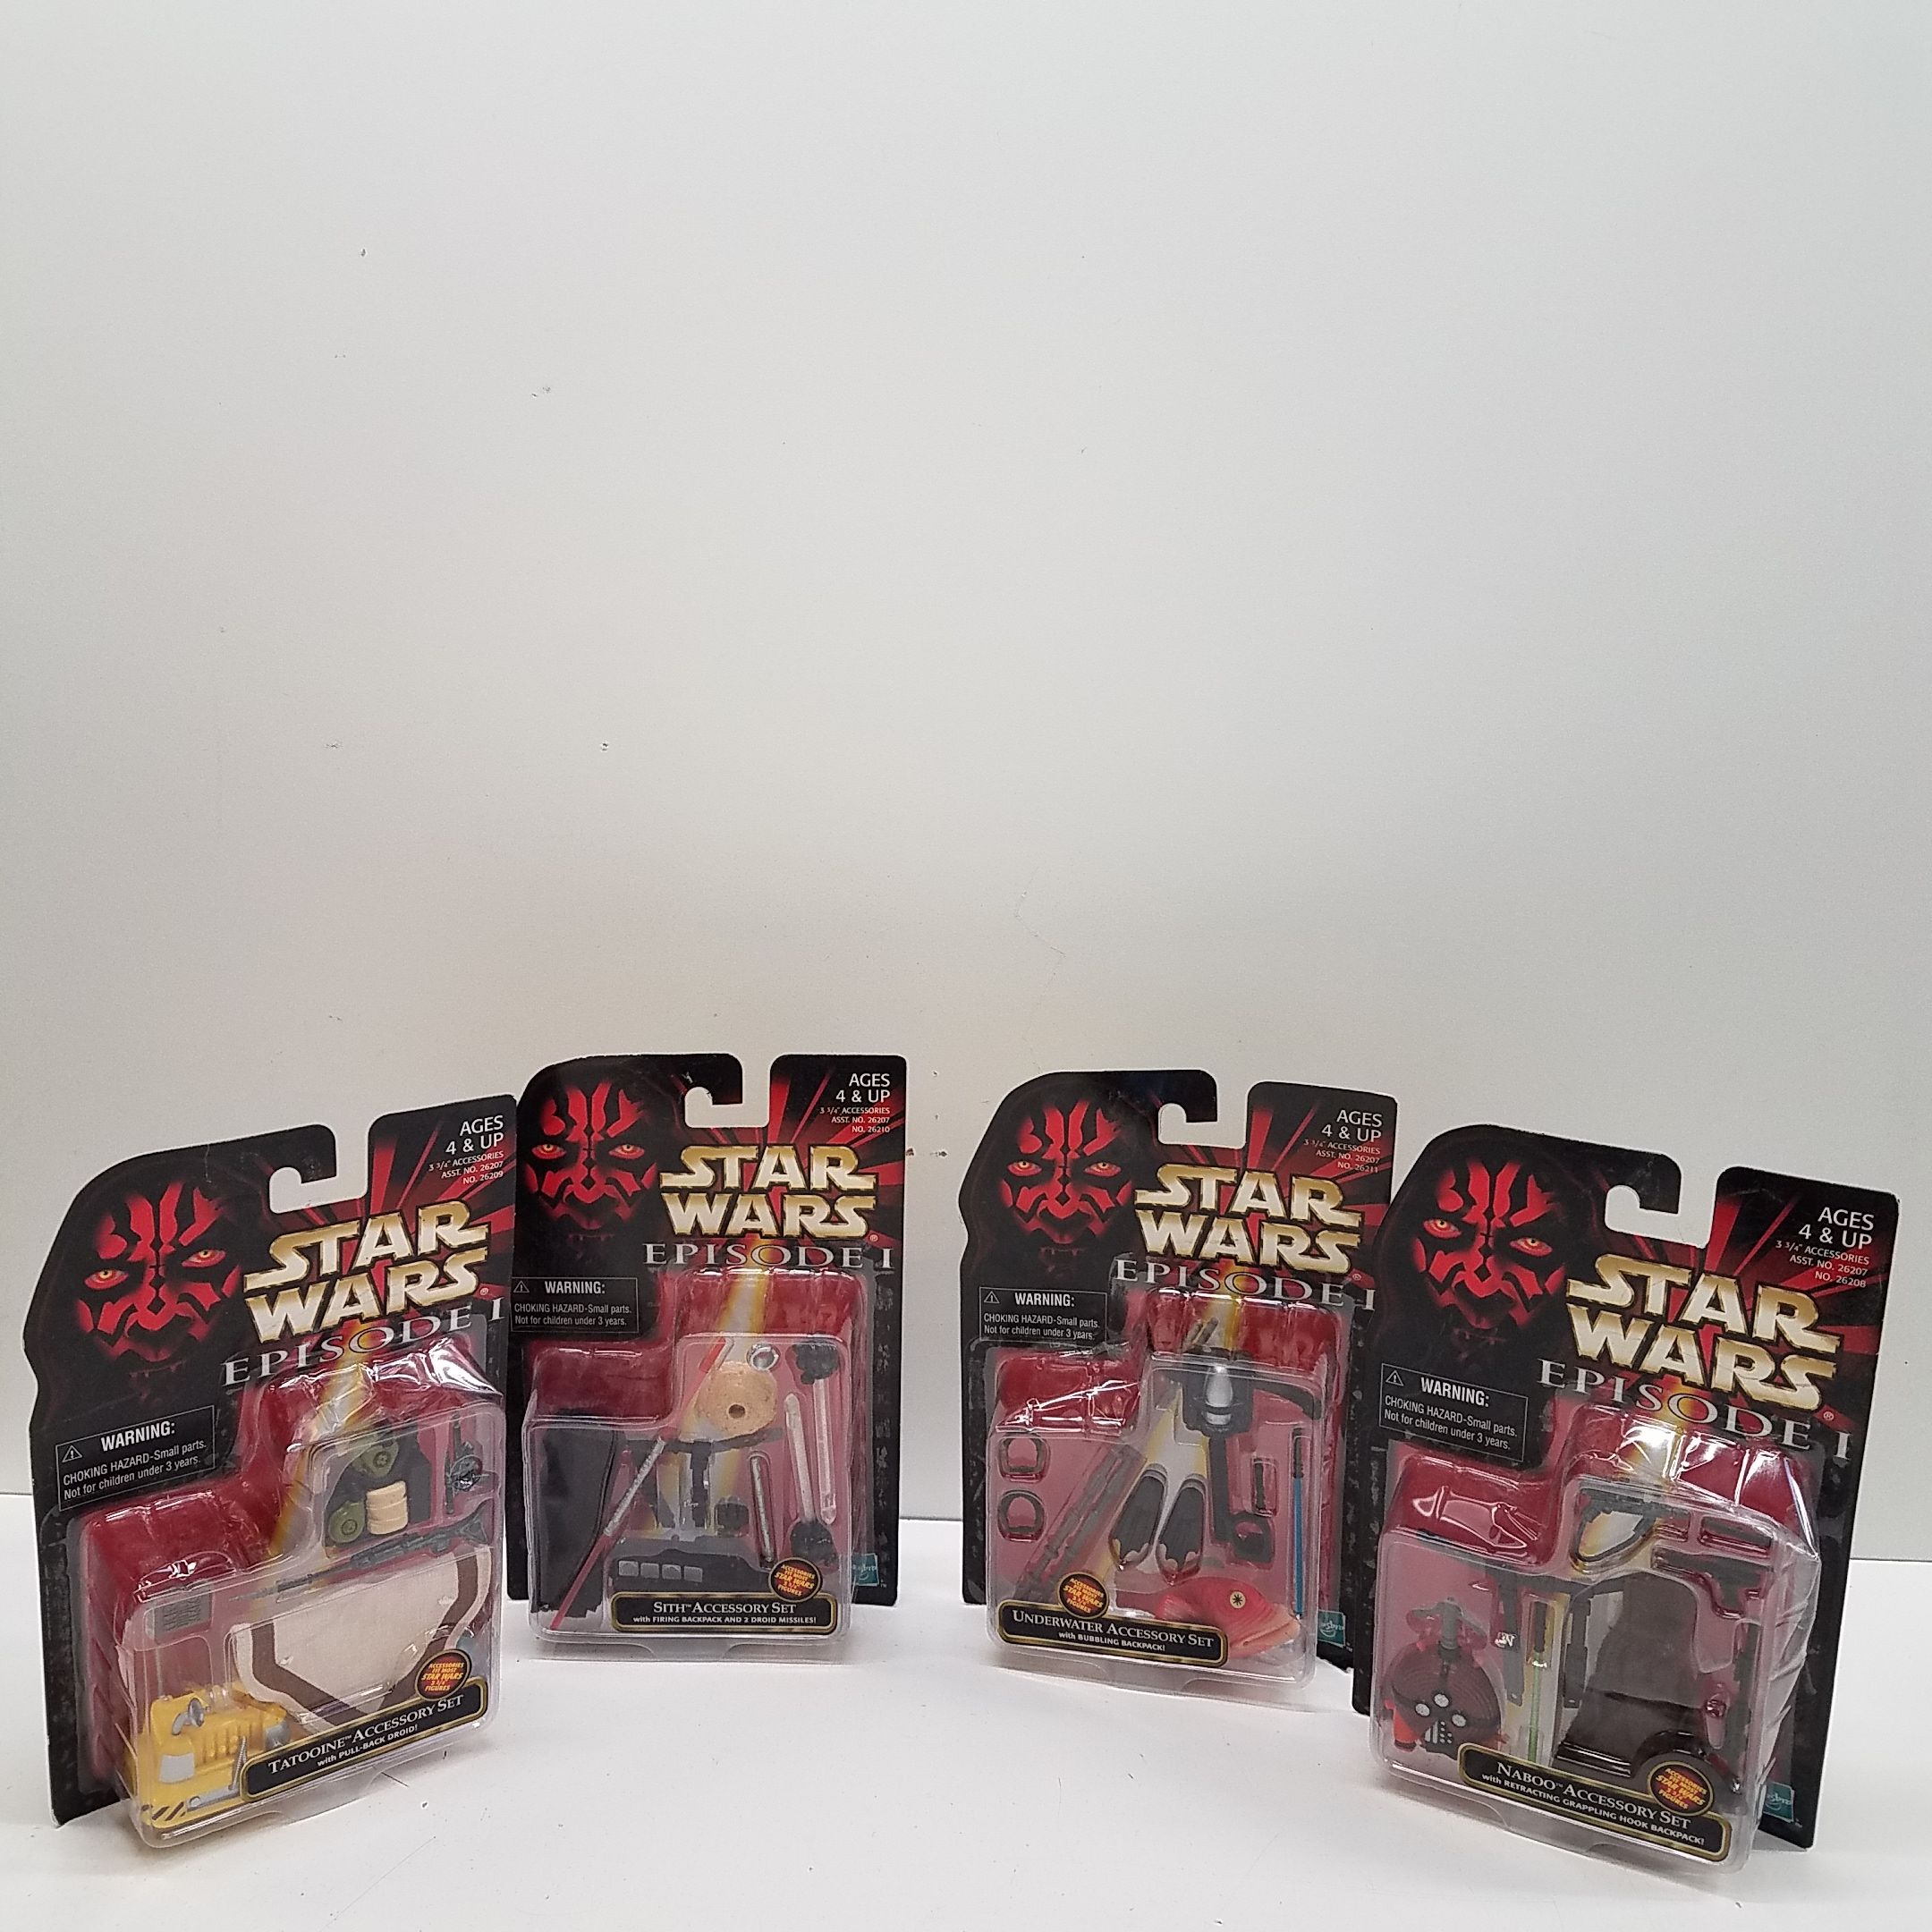 Naboo Accessory Set Grappling hook bag pack star wars EP 1 Hasbro